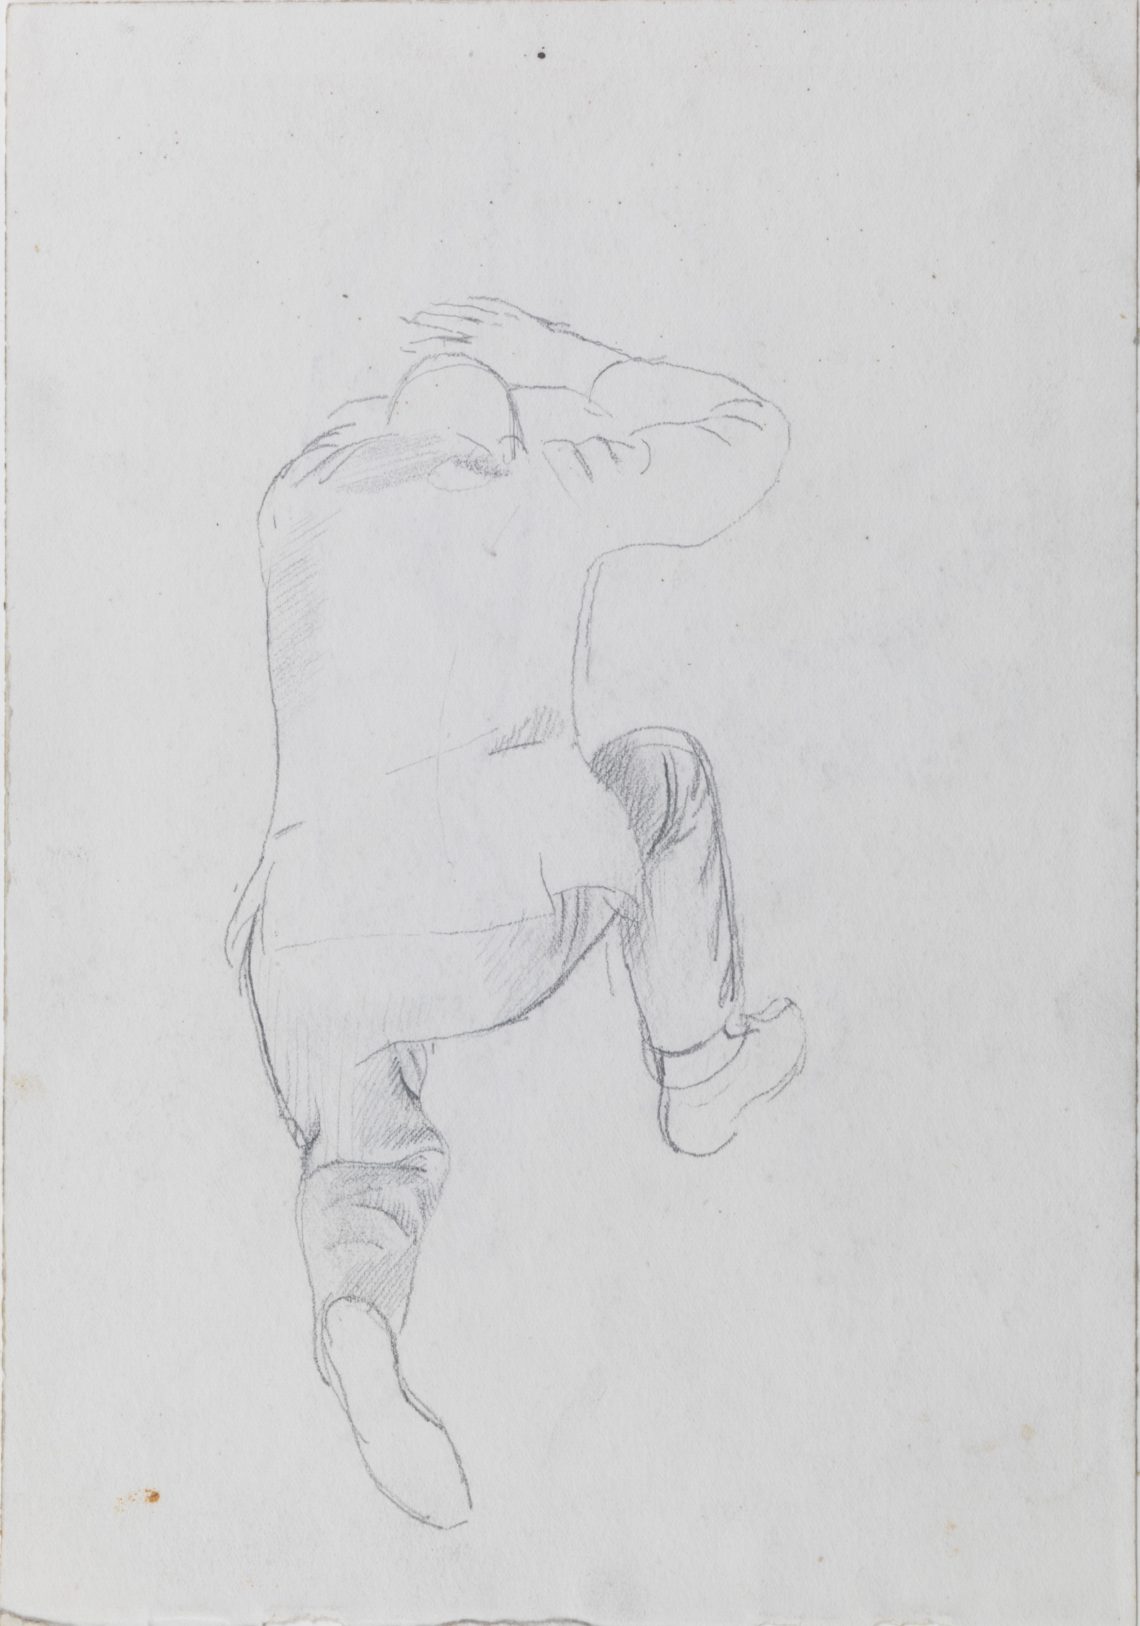 Henry_Lamb_Sketch-for-Irish-Troops-in-the-Judeaen-Hills-V22, 21.1 x 26.1cm